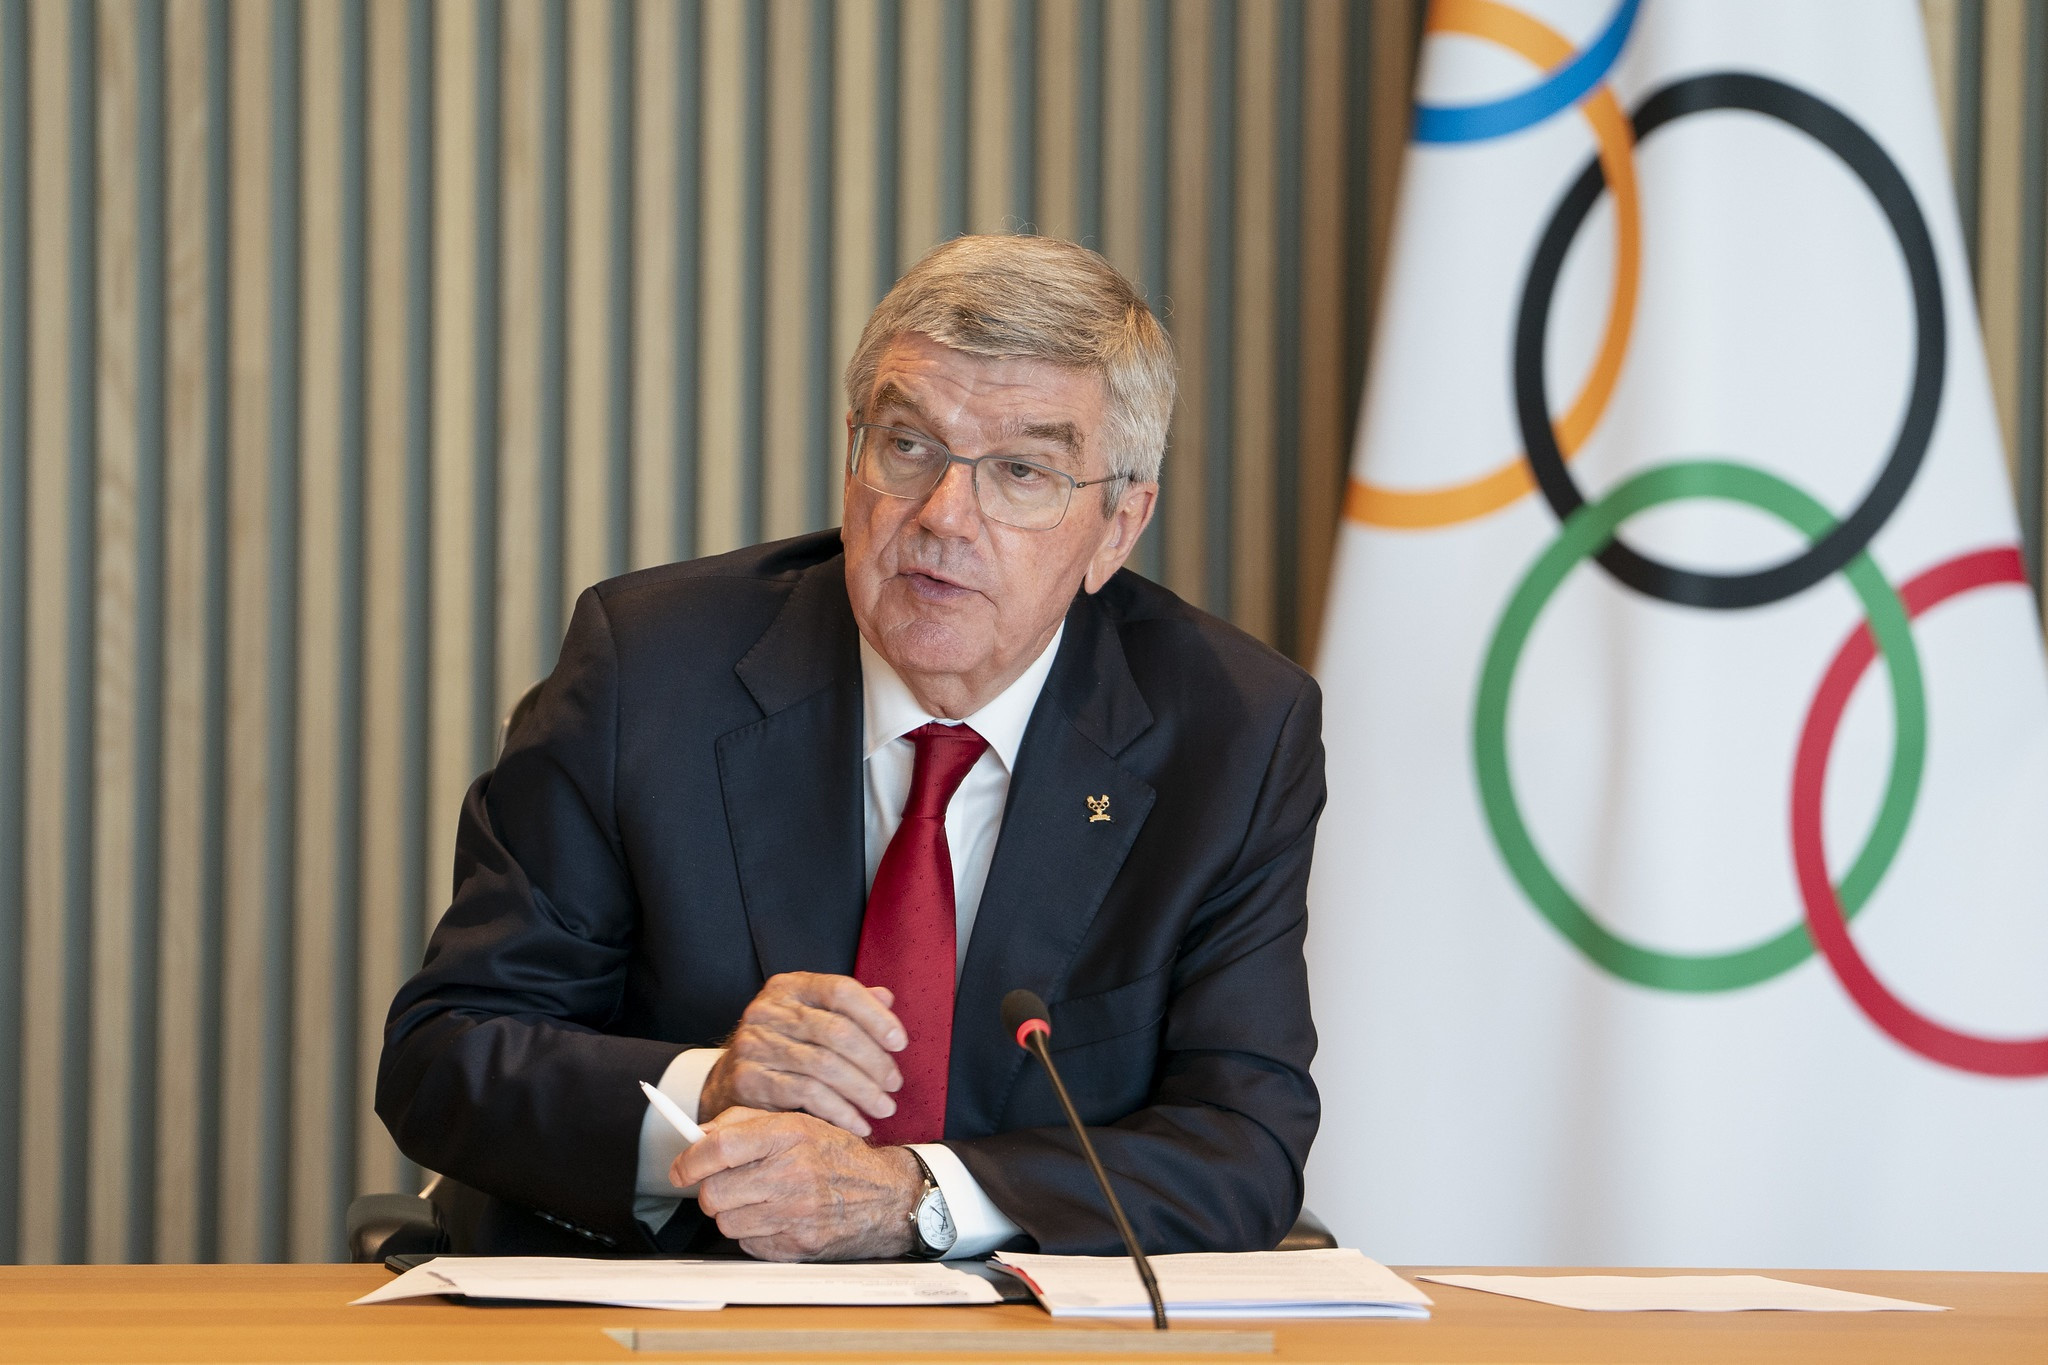 IOC President Thomas Bach has previously expressed 